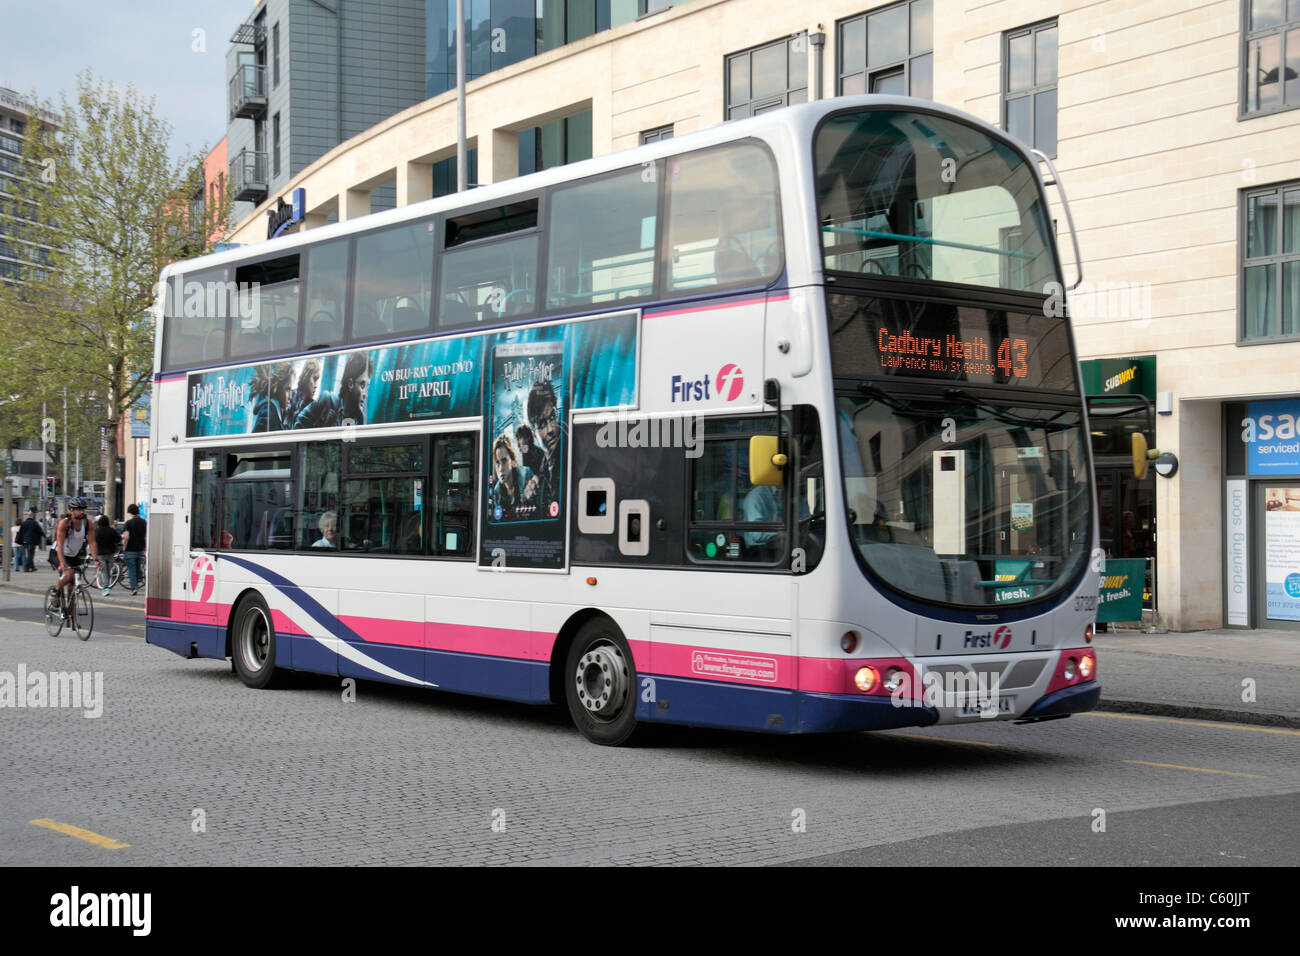 The No 43 First Group public bus to Cadbury Heath in Bristol, UK. Stock Photo